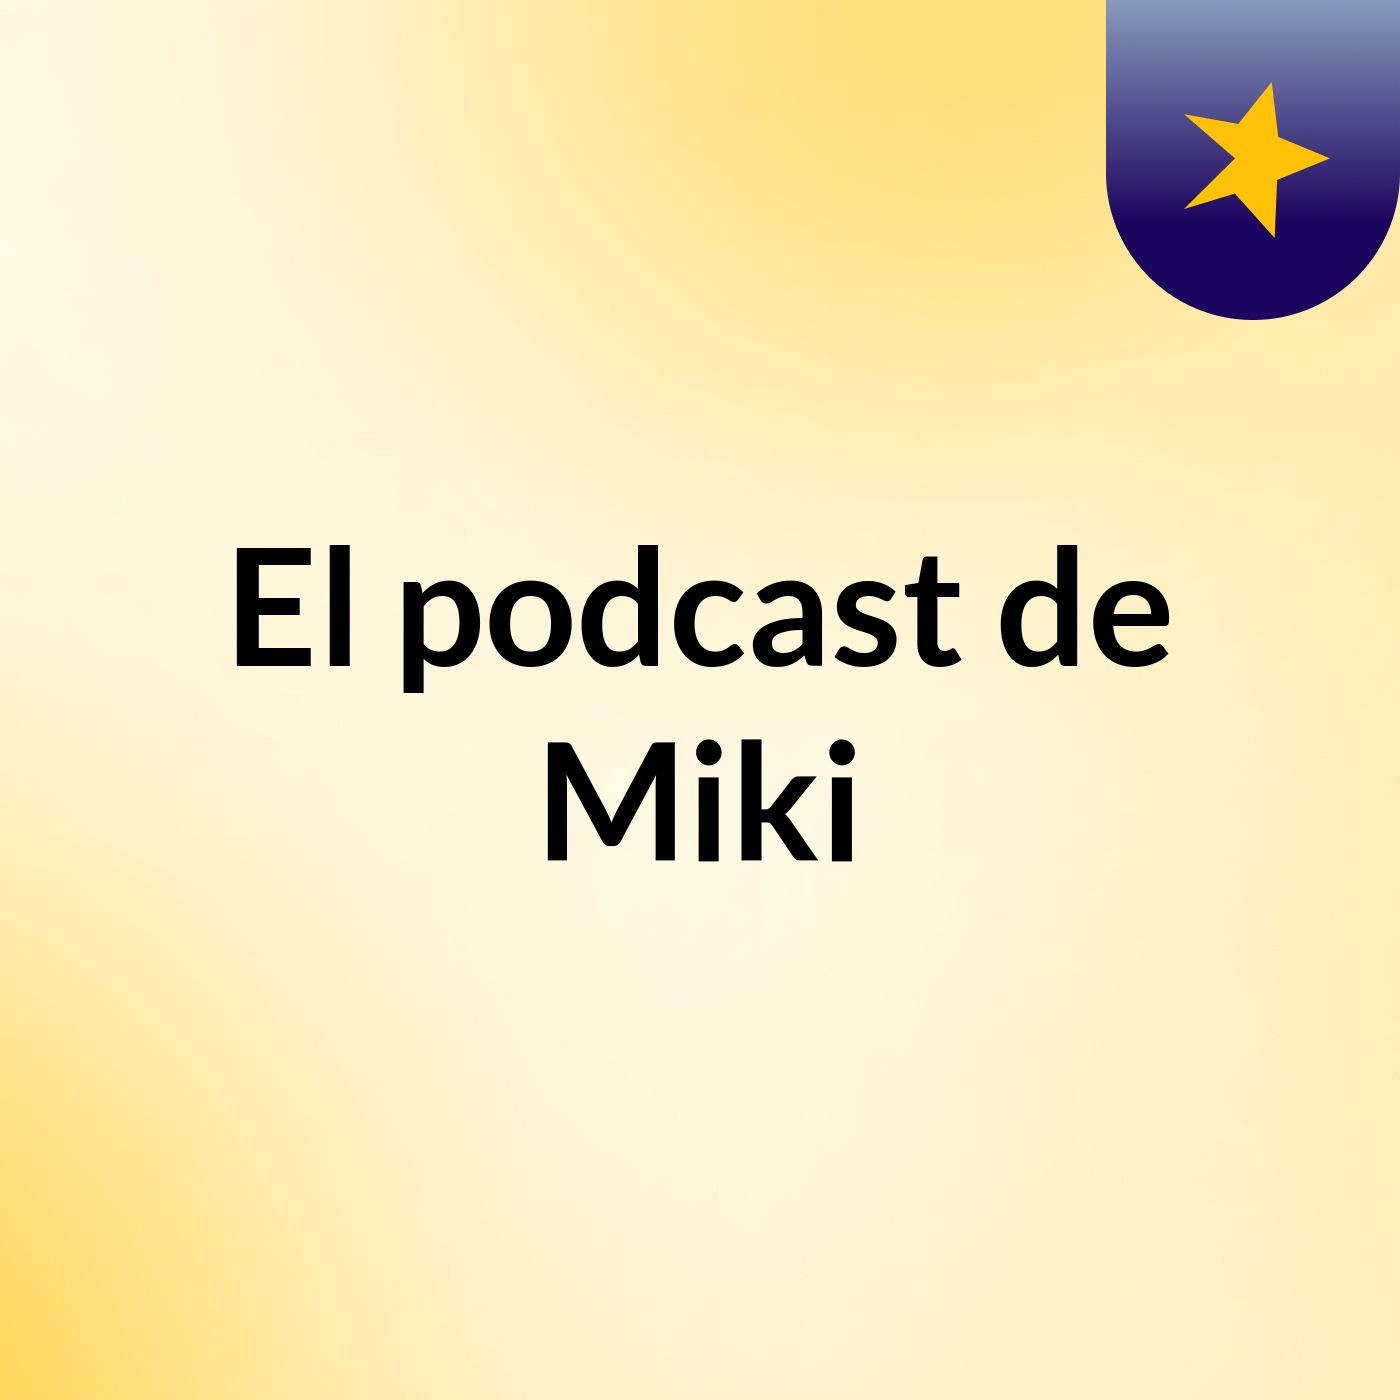 Episodio 4 - El podcast de Miki